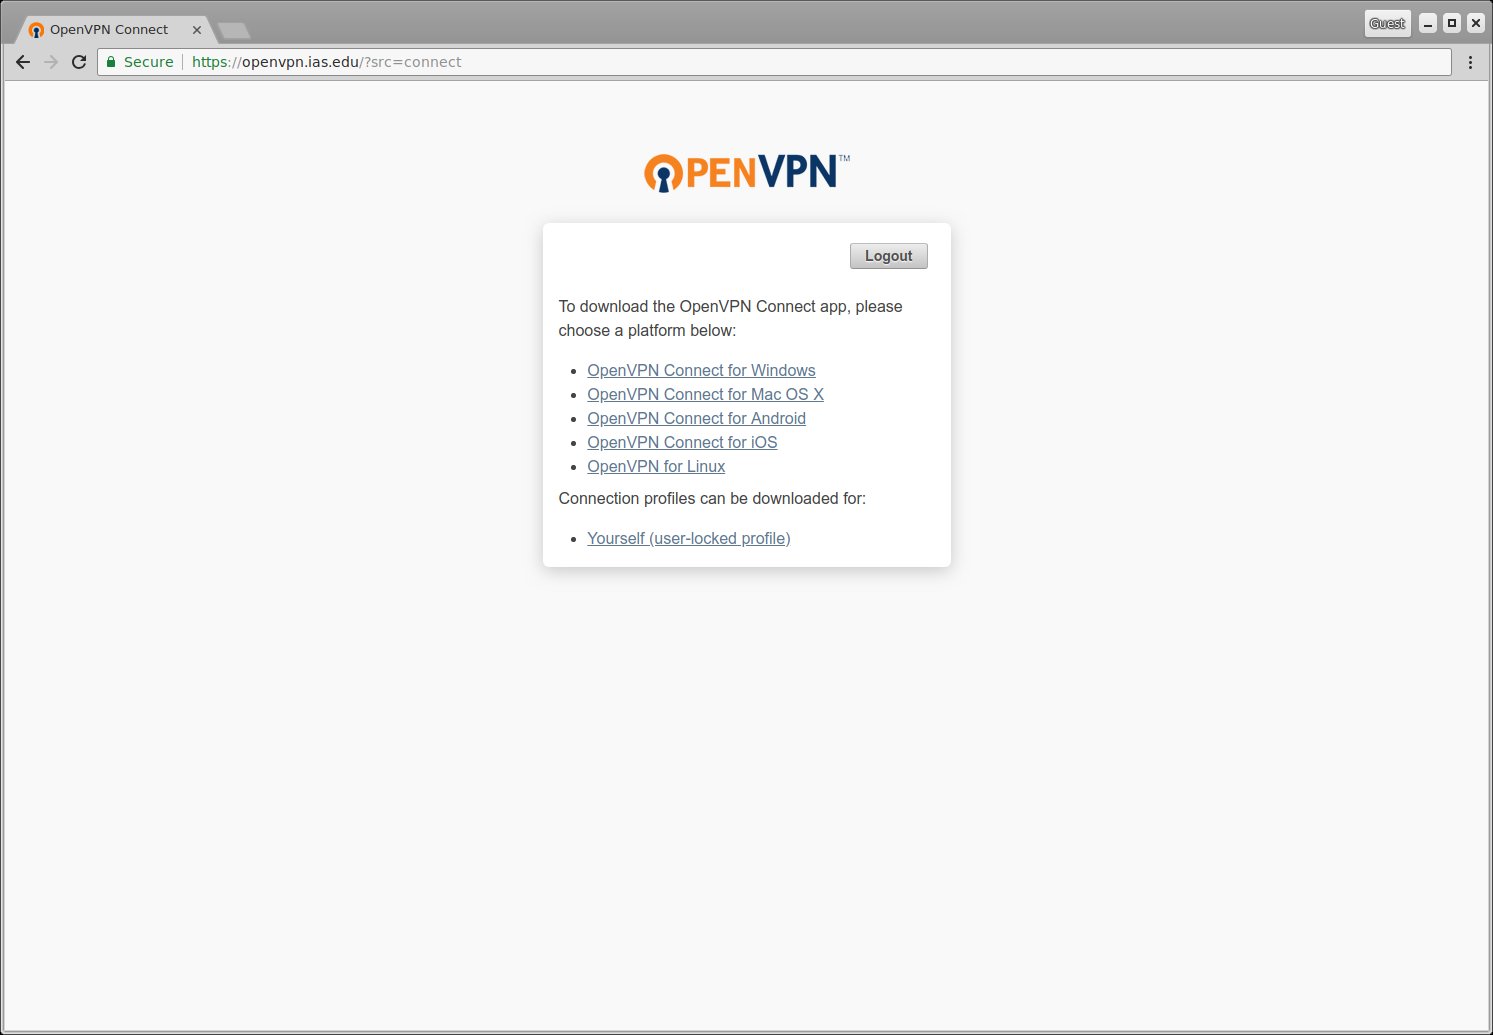 openvpn web interface linux wine